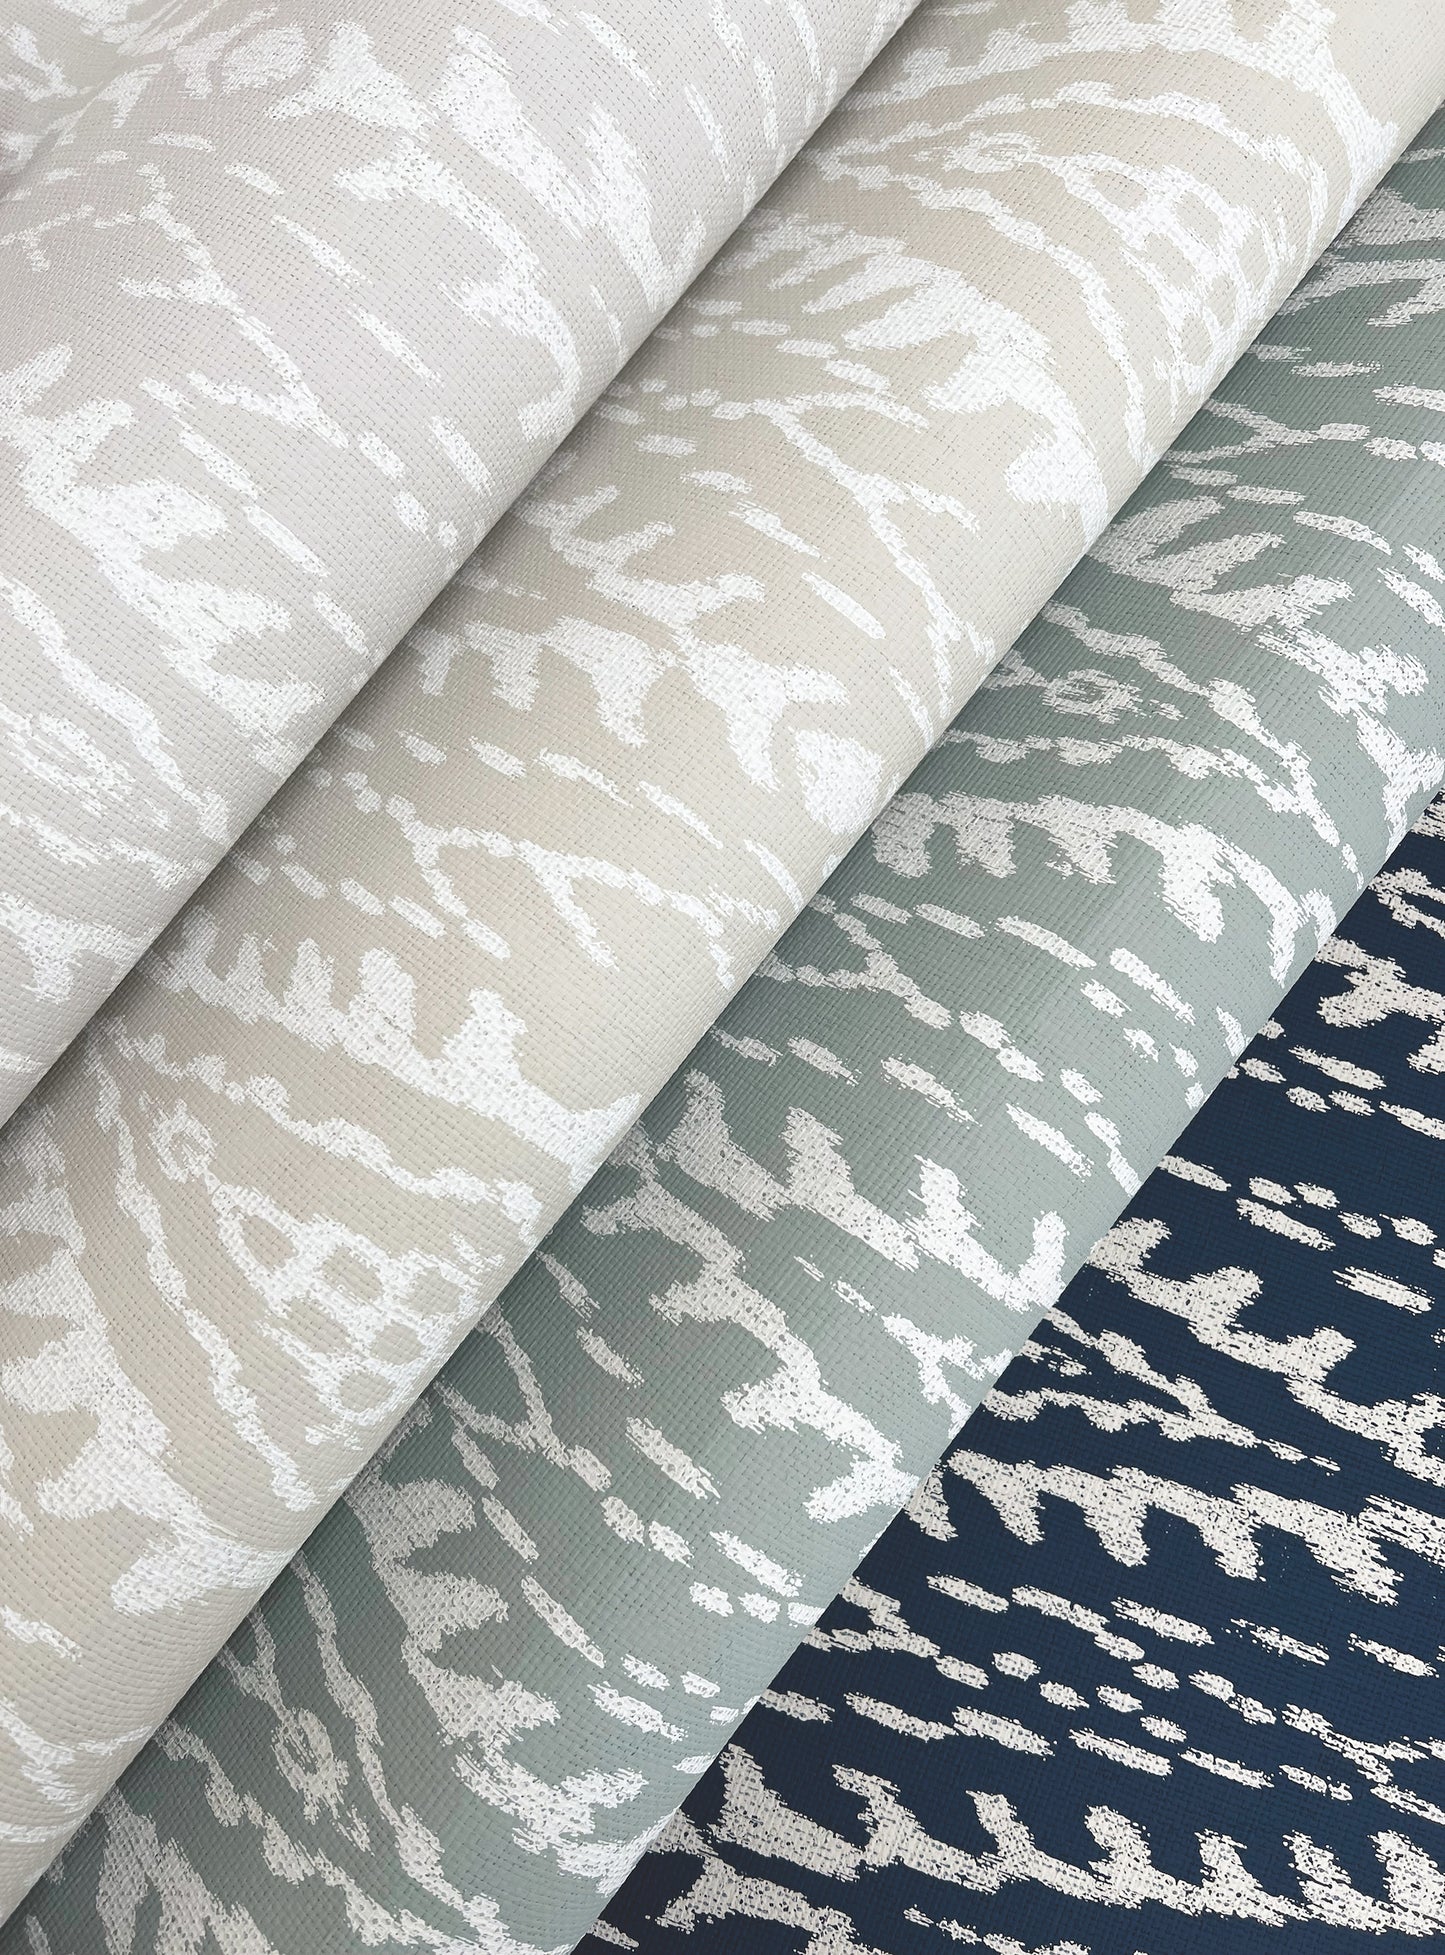 Rousseau Paperweave Wallpaper (Linen)